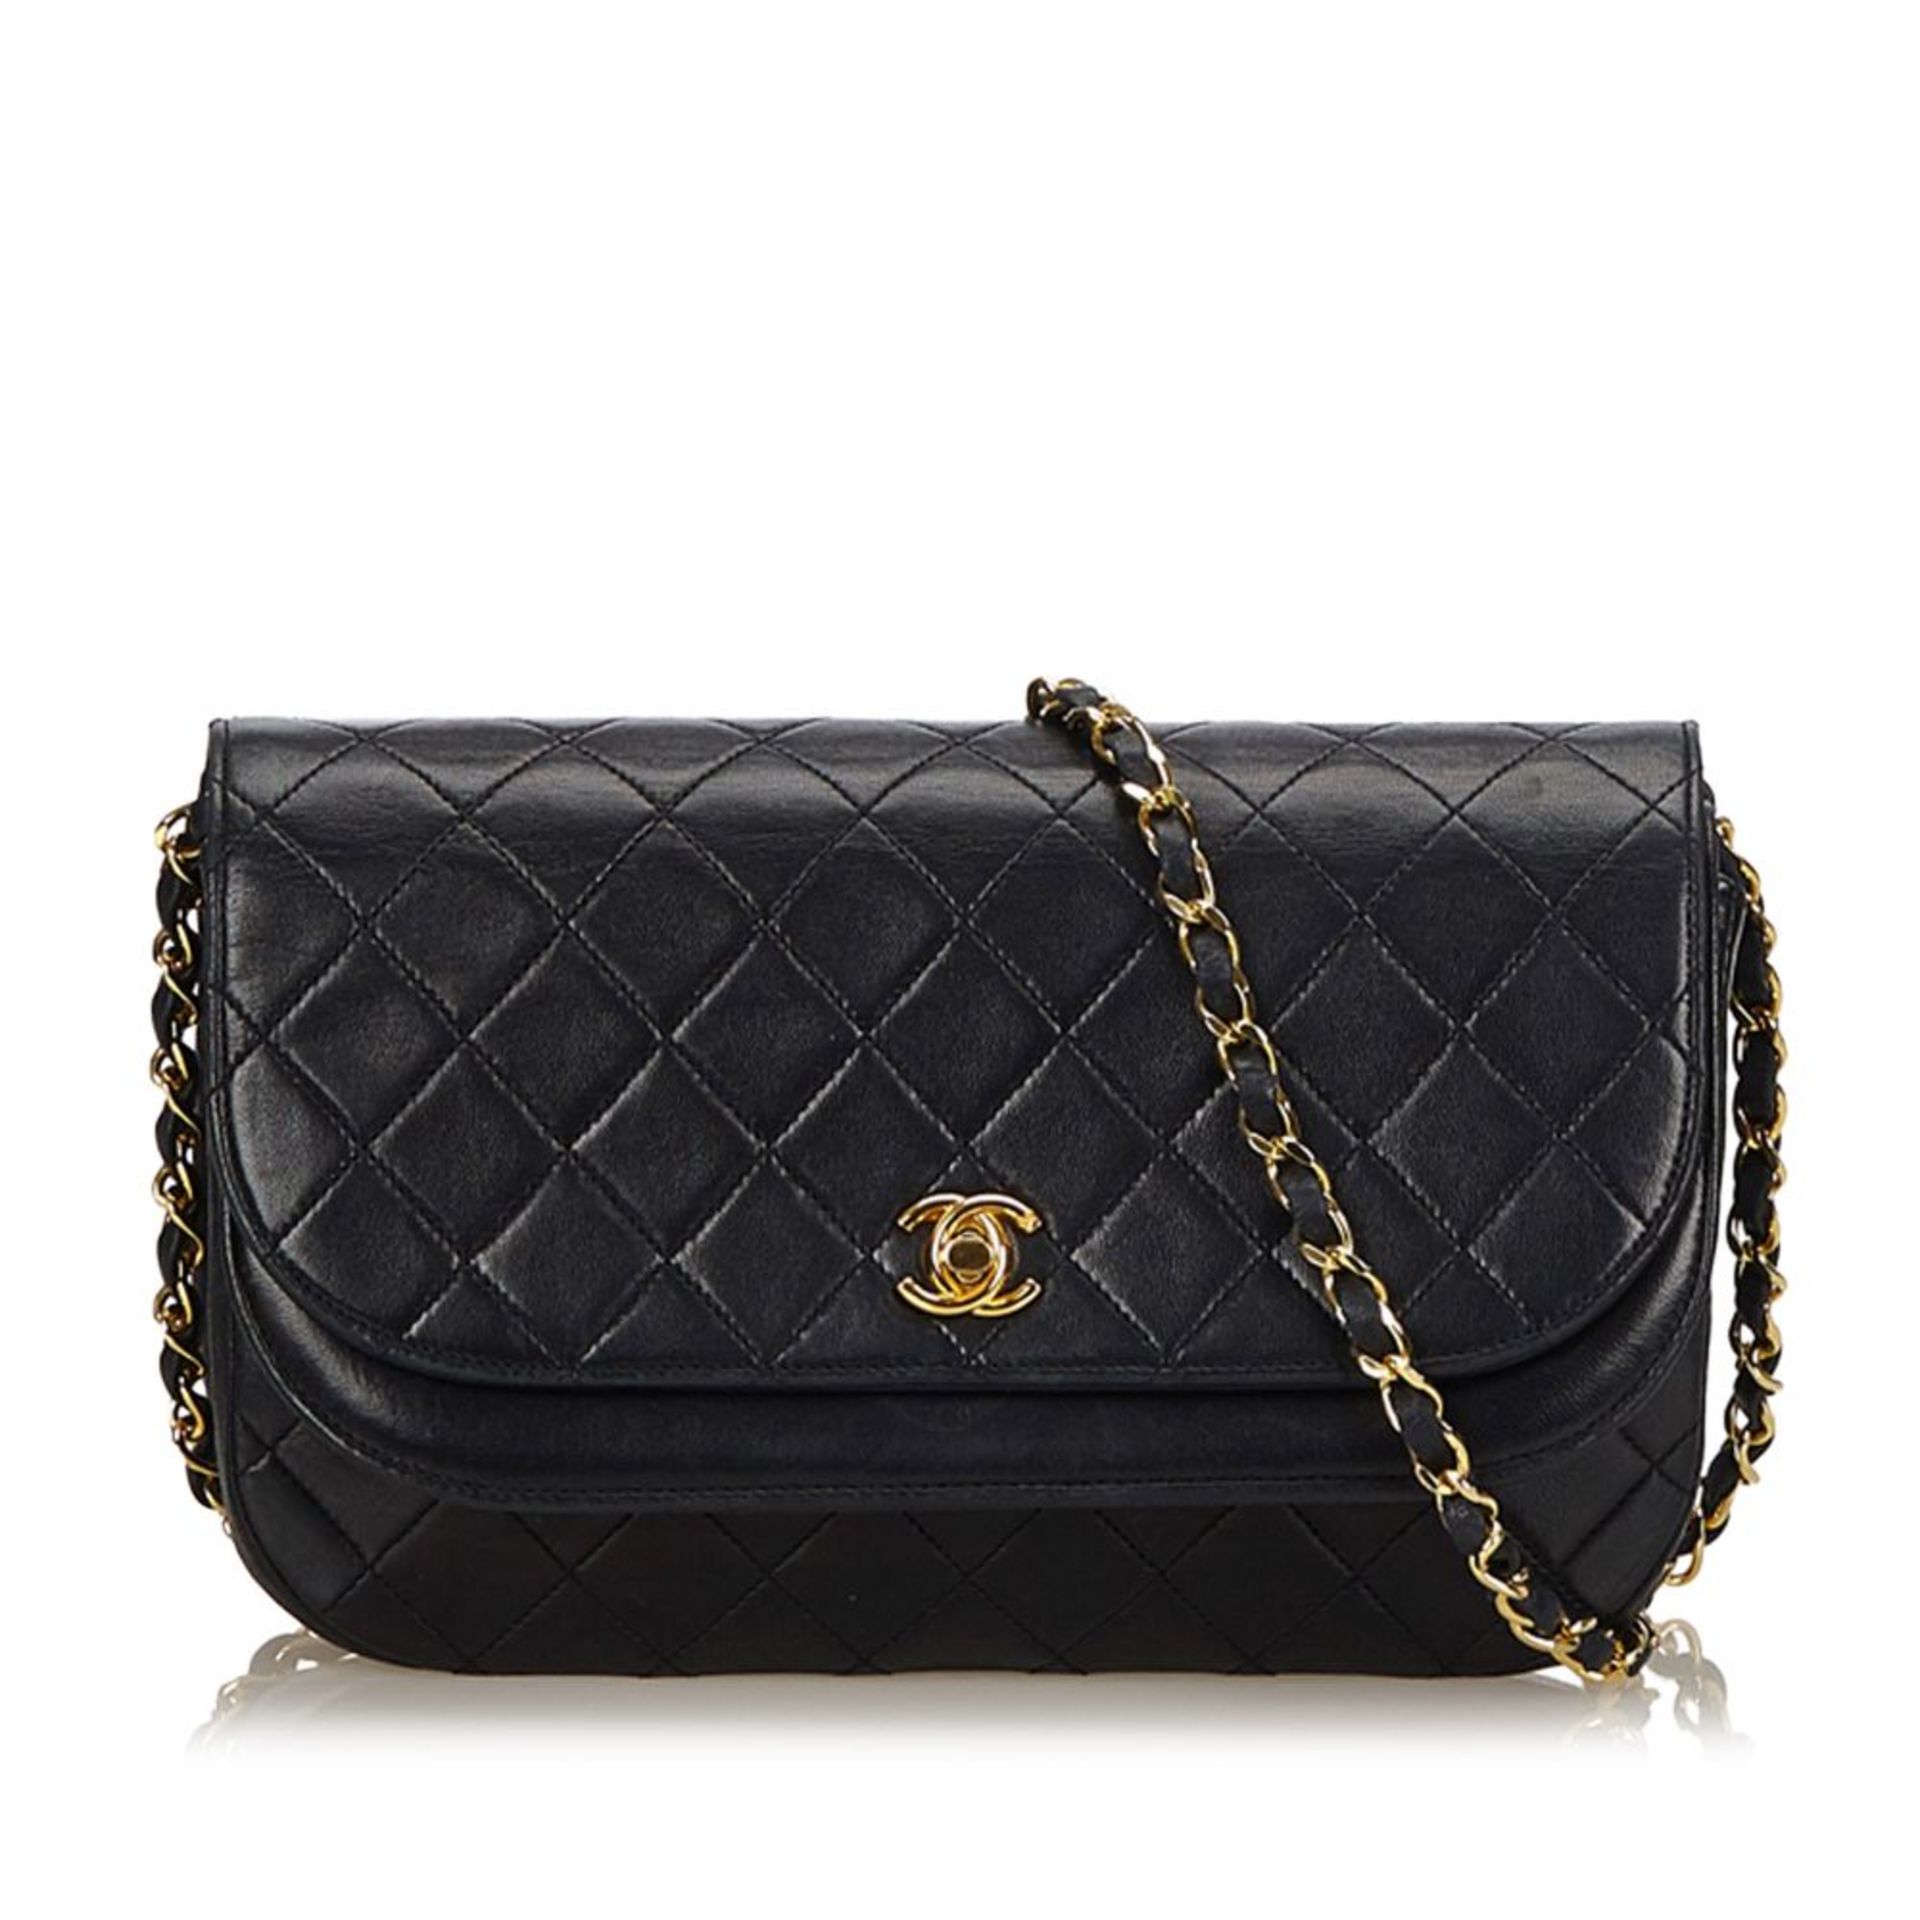 A Chanel matelassé half moon flap shoulder bag,with a leather body, gold-tone chains, a double